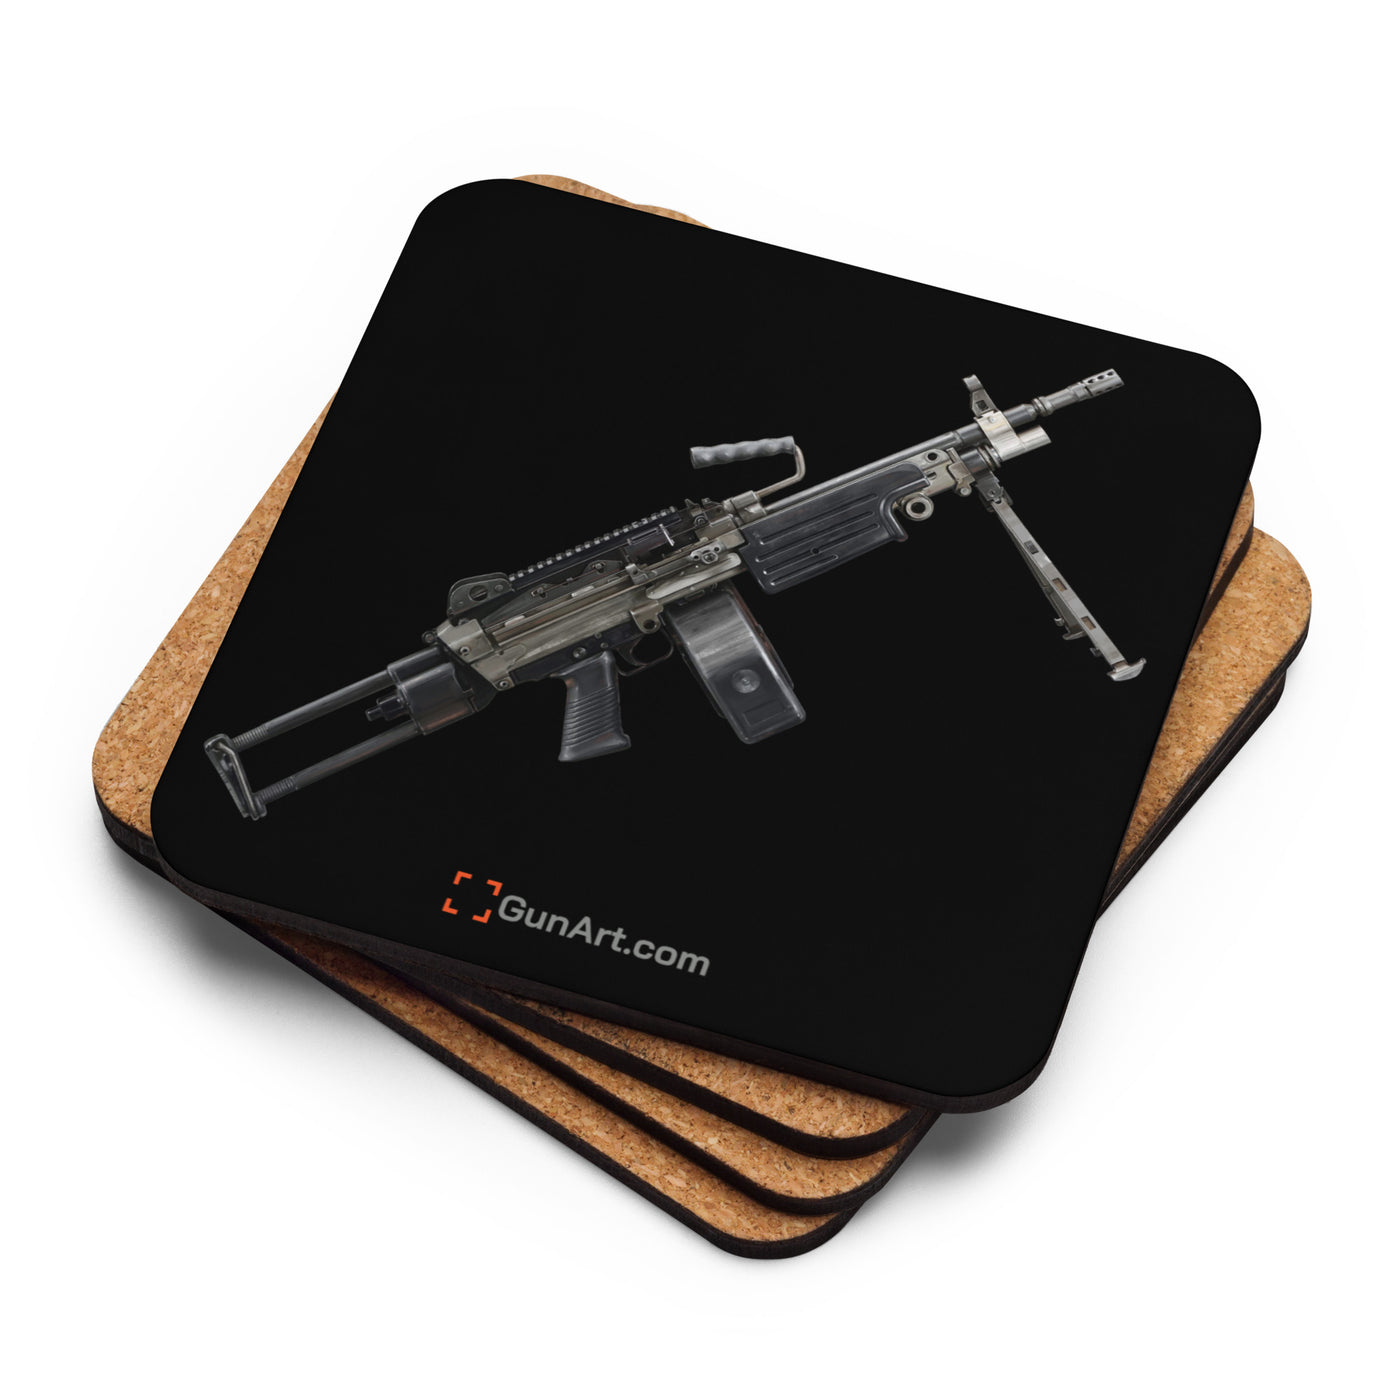 Belt-Fed 5.56x45mm Light Machine Gun Cork-back Coaster - Black Background